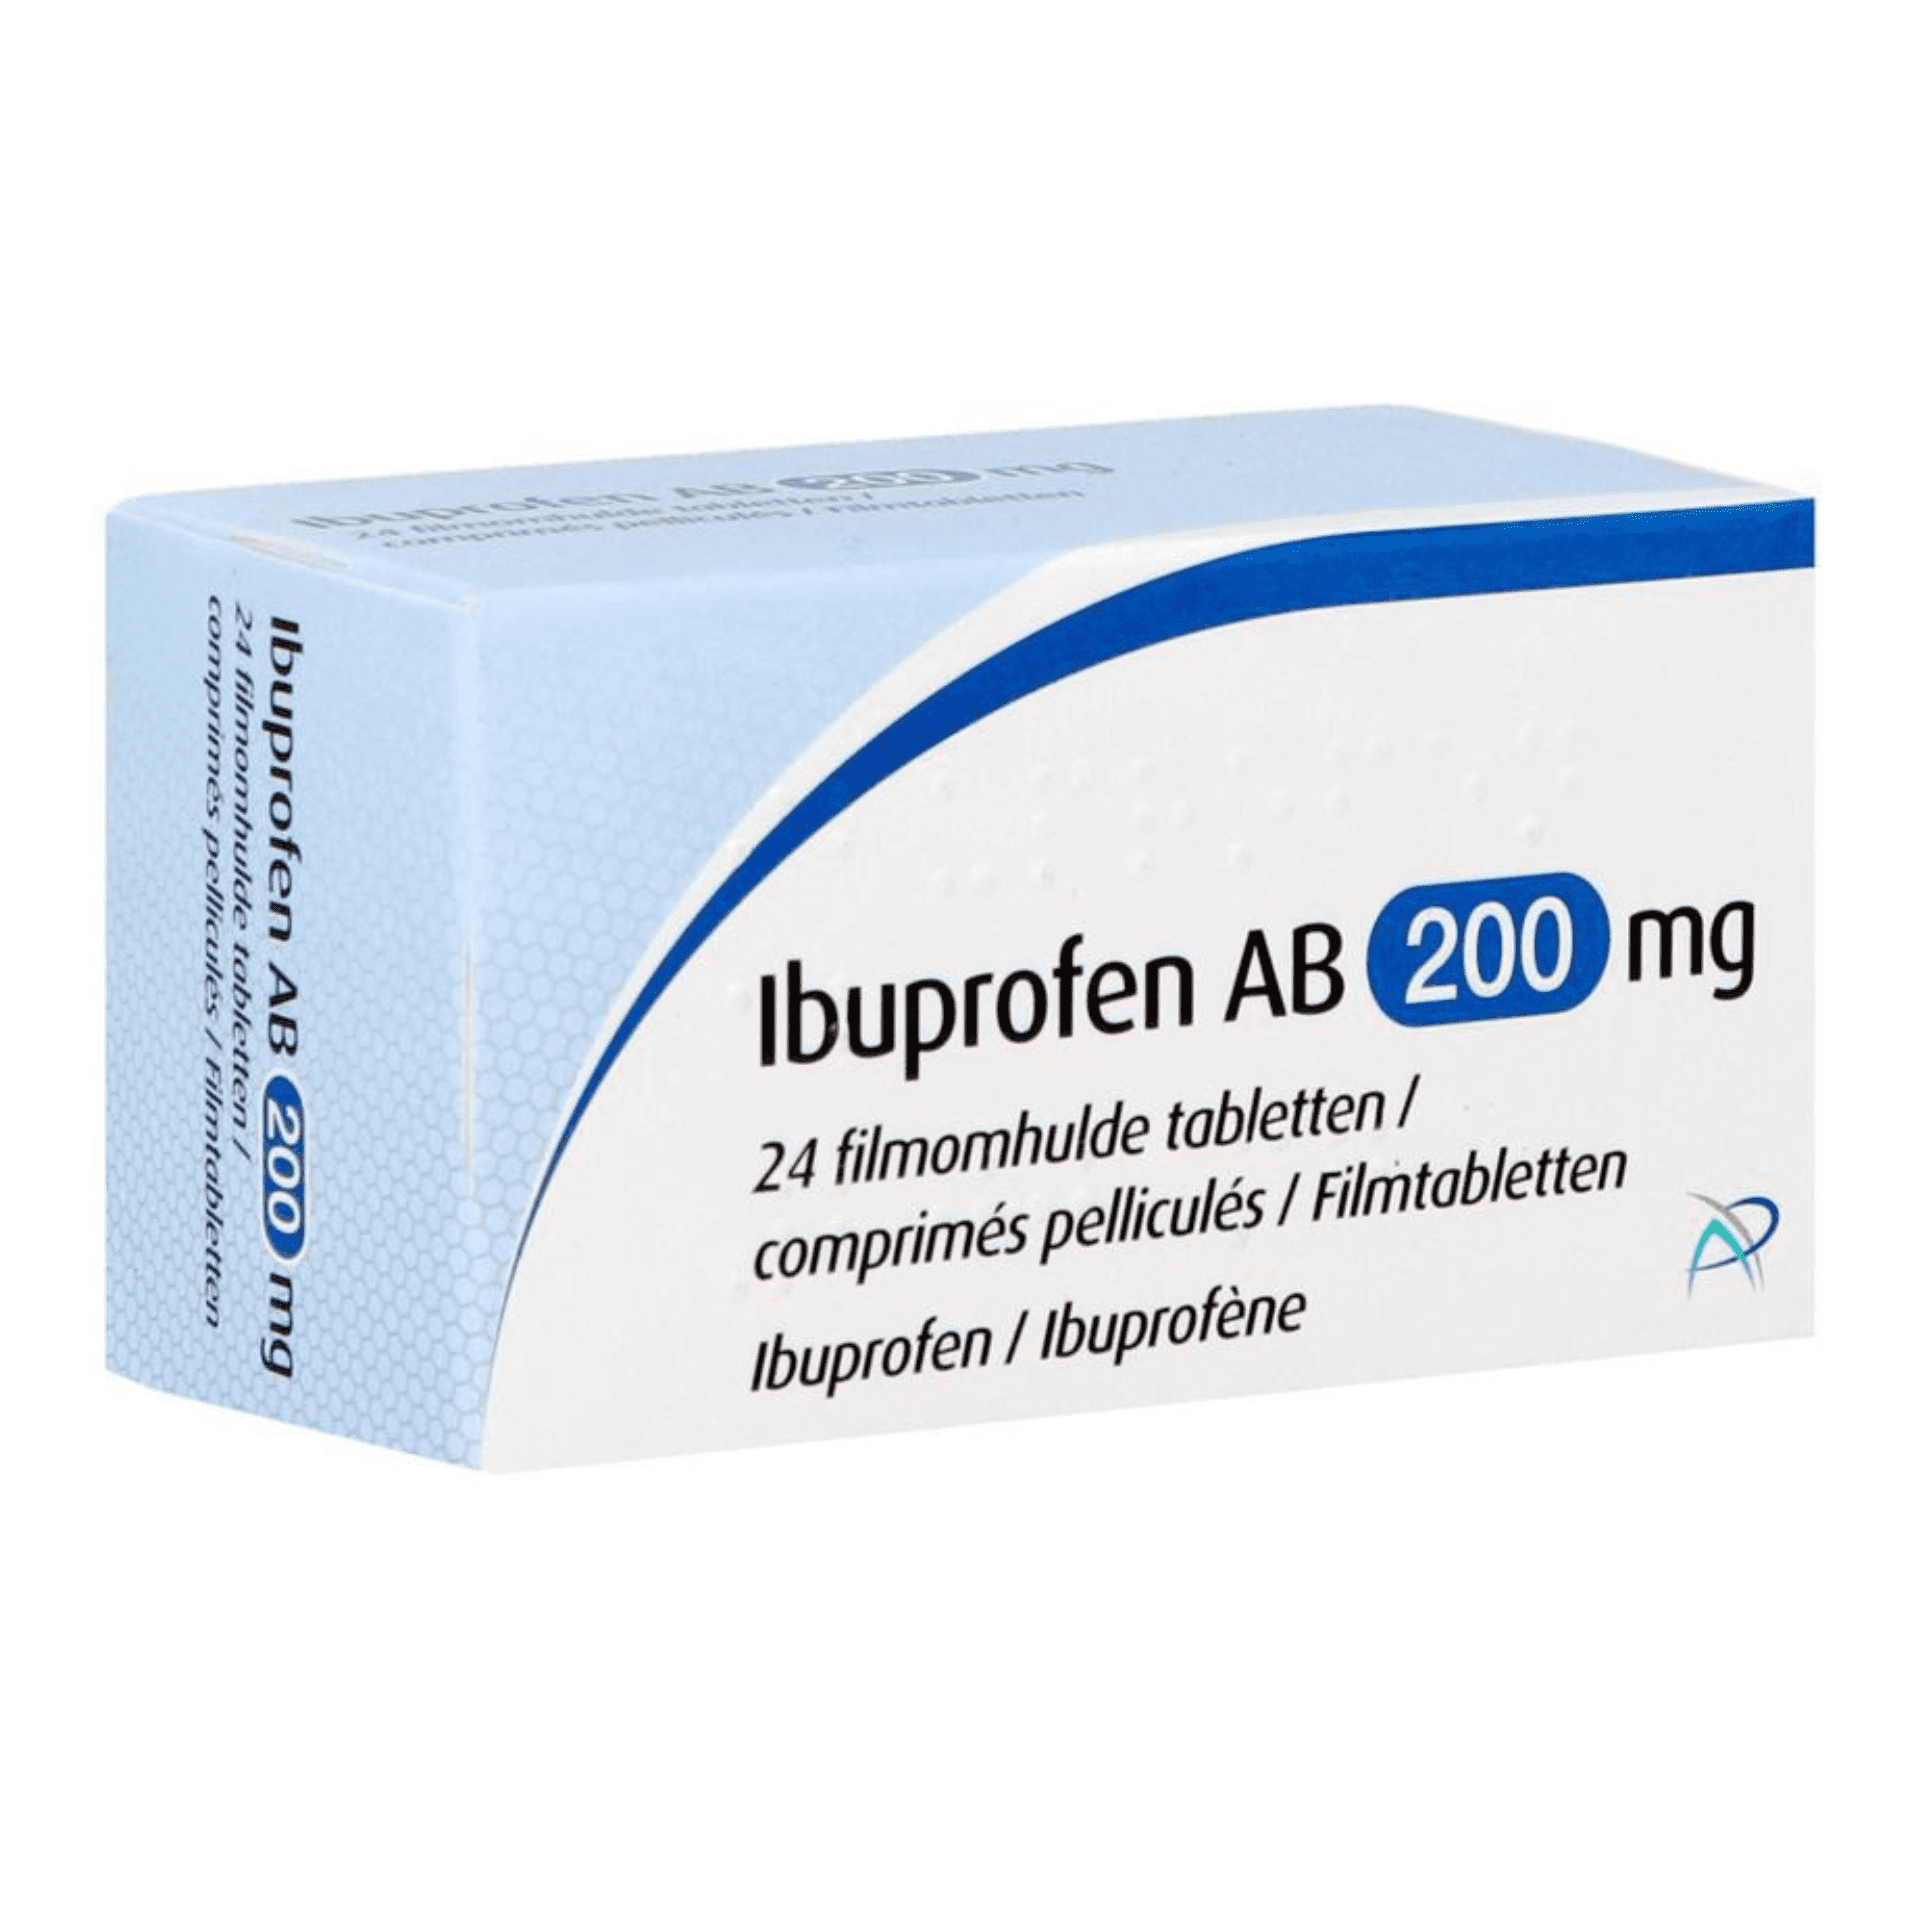 Ibuprofen AB 200 mg Filmomhulde tabletten